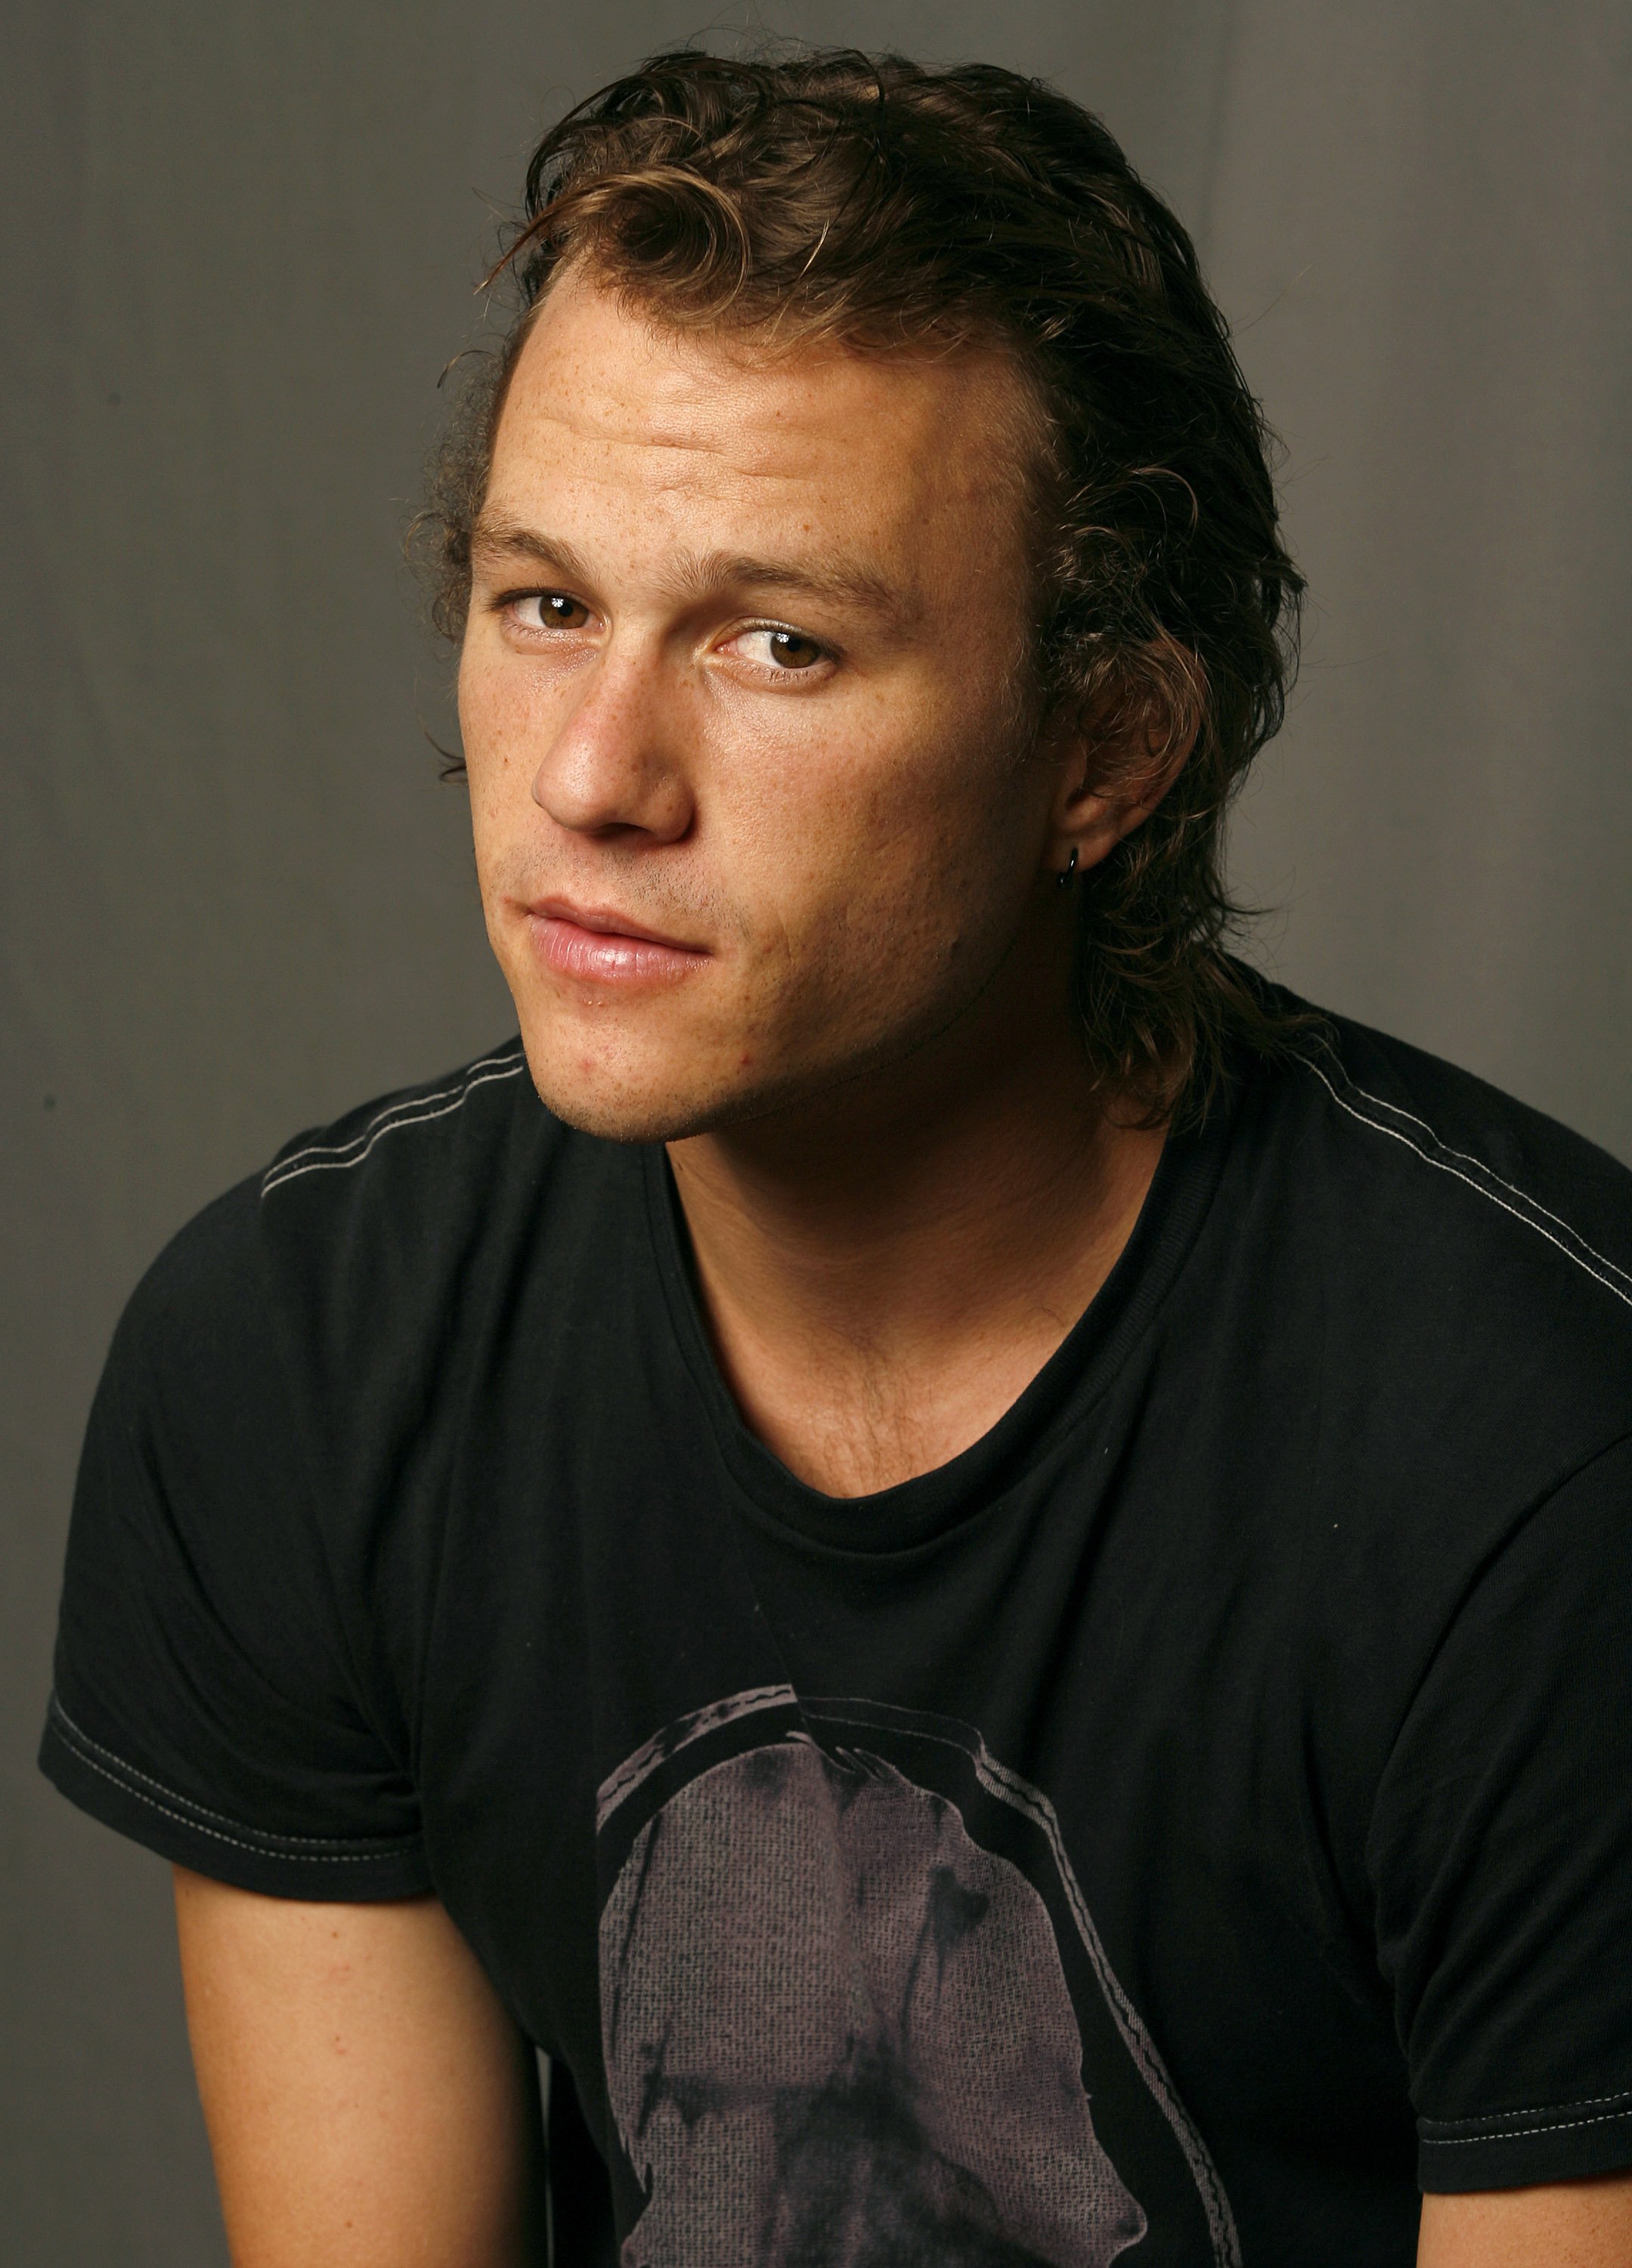 Heath Ledger's portrait for the 31st Annual Toronto International Film Festival. | Photo: Getty Images